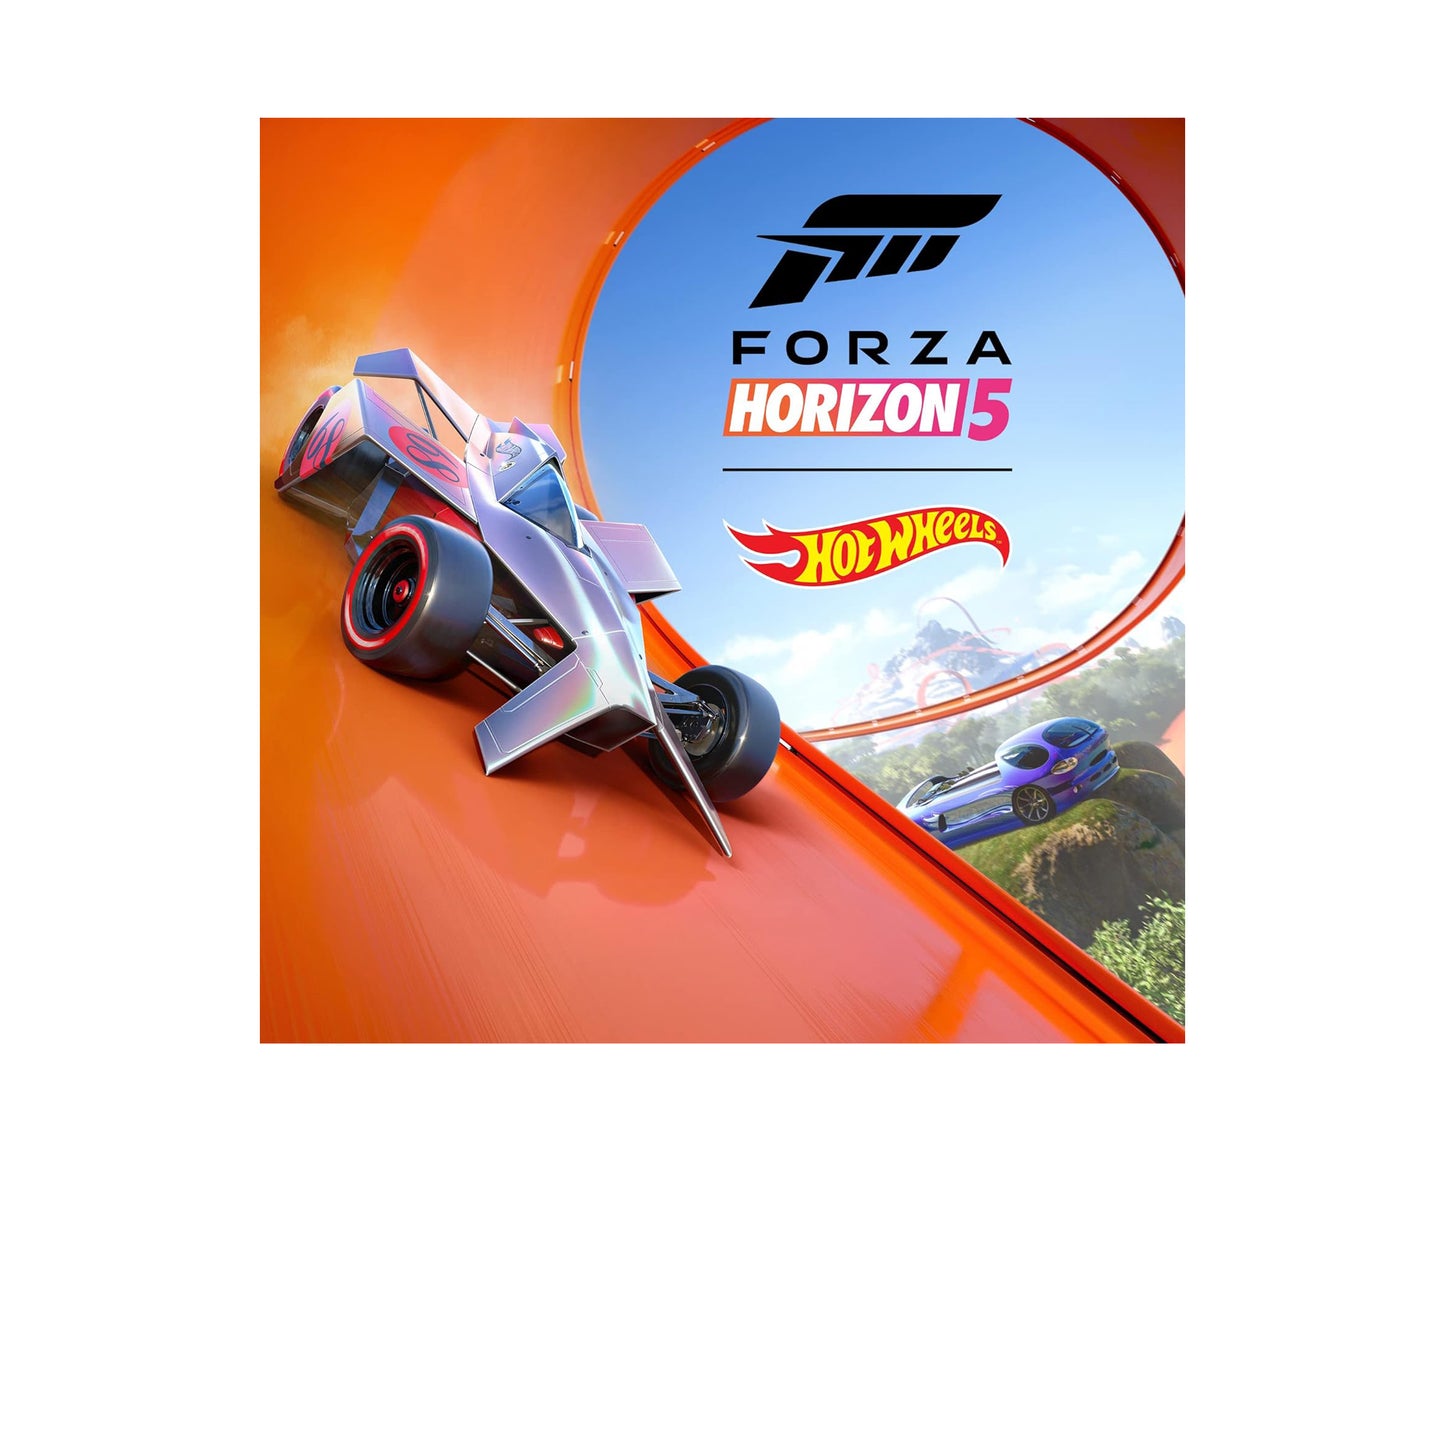 Forza Horizon 5 – حزمة التوسعات – Xbox Series X|S، Xbox One، Windows [الرمز الرقمي] 